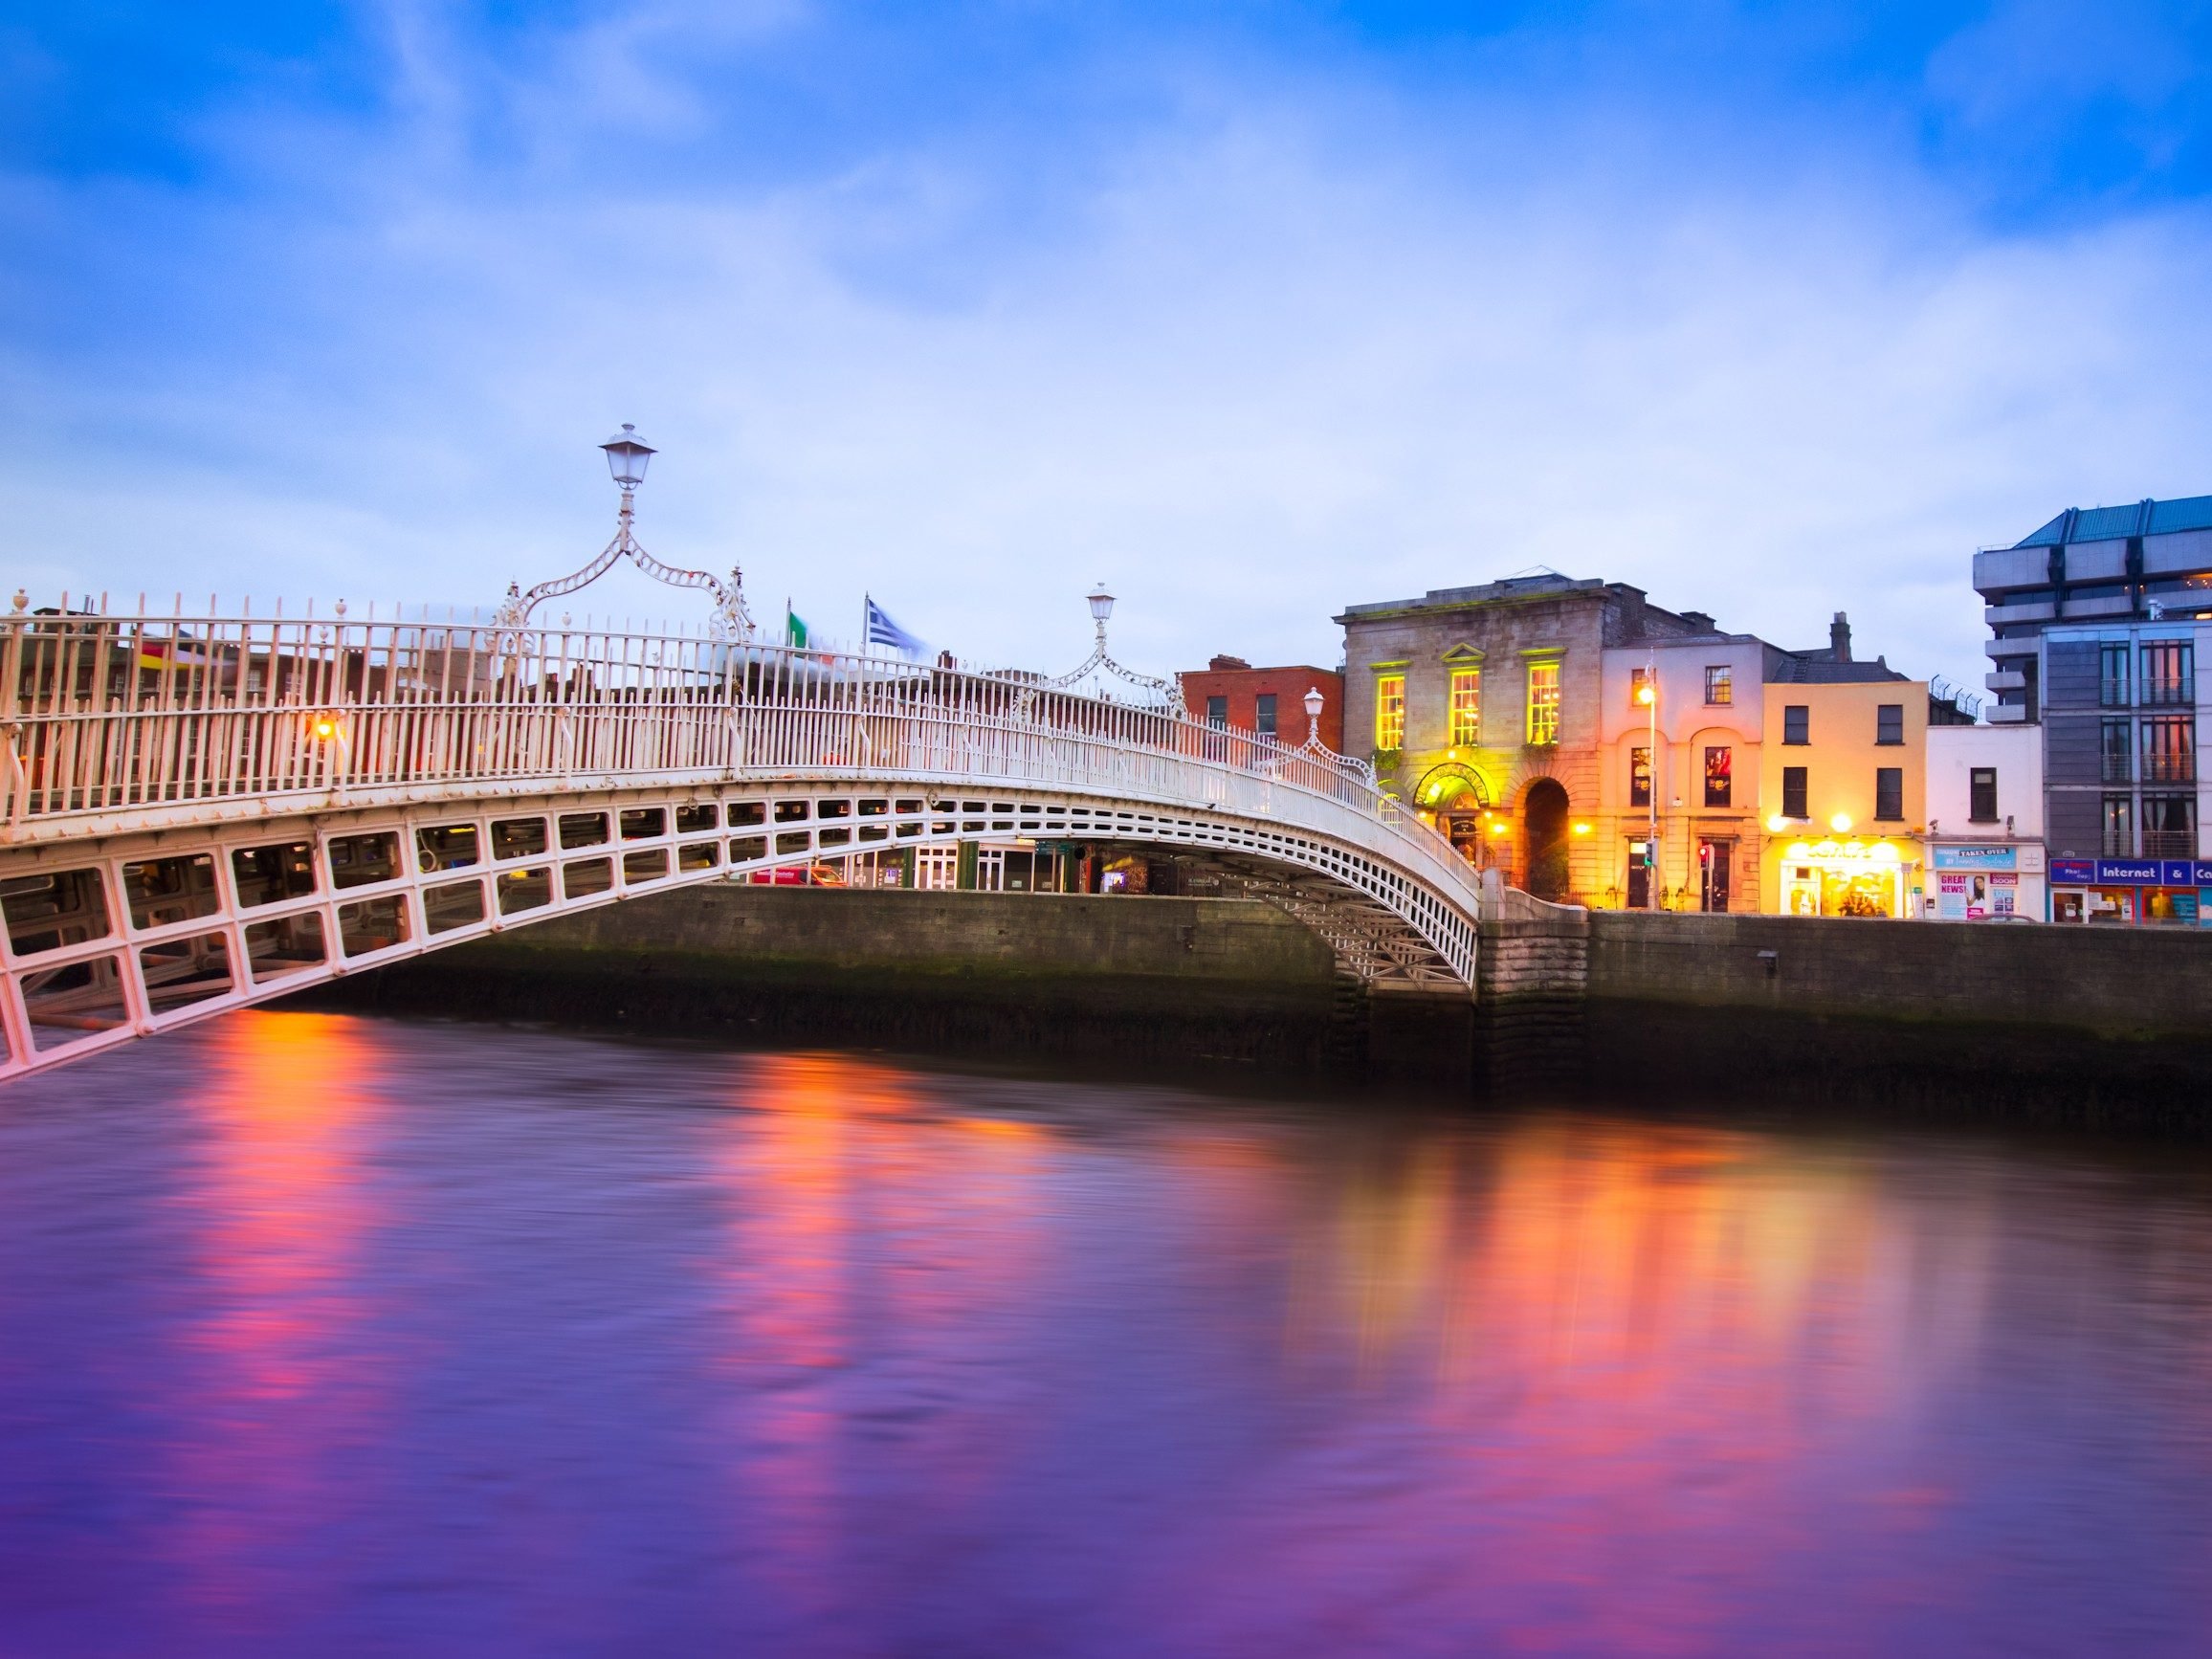 7. Visit Dublin